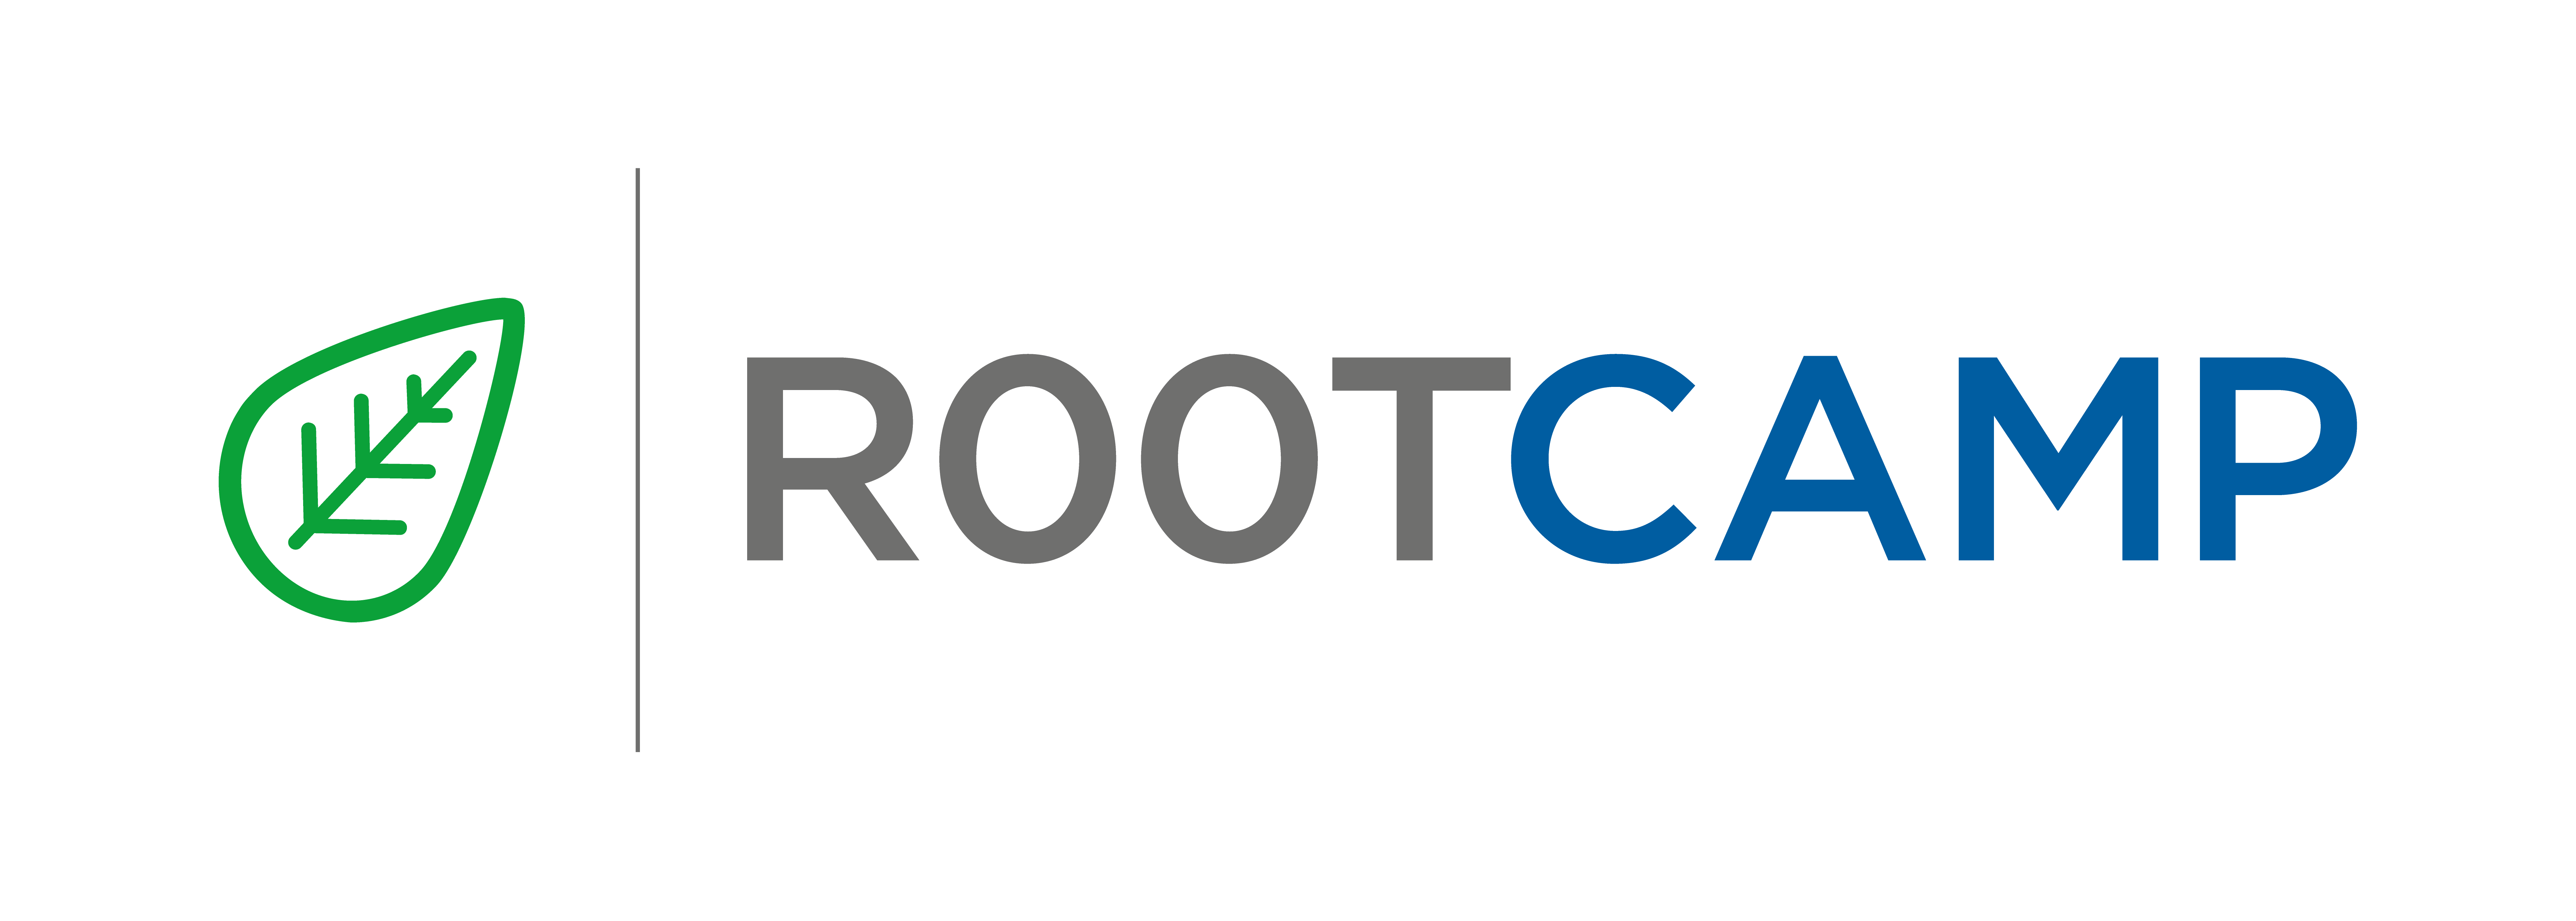 Rootcamp